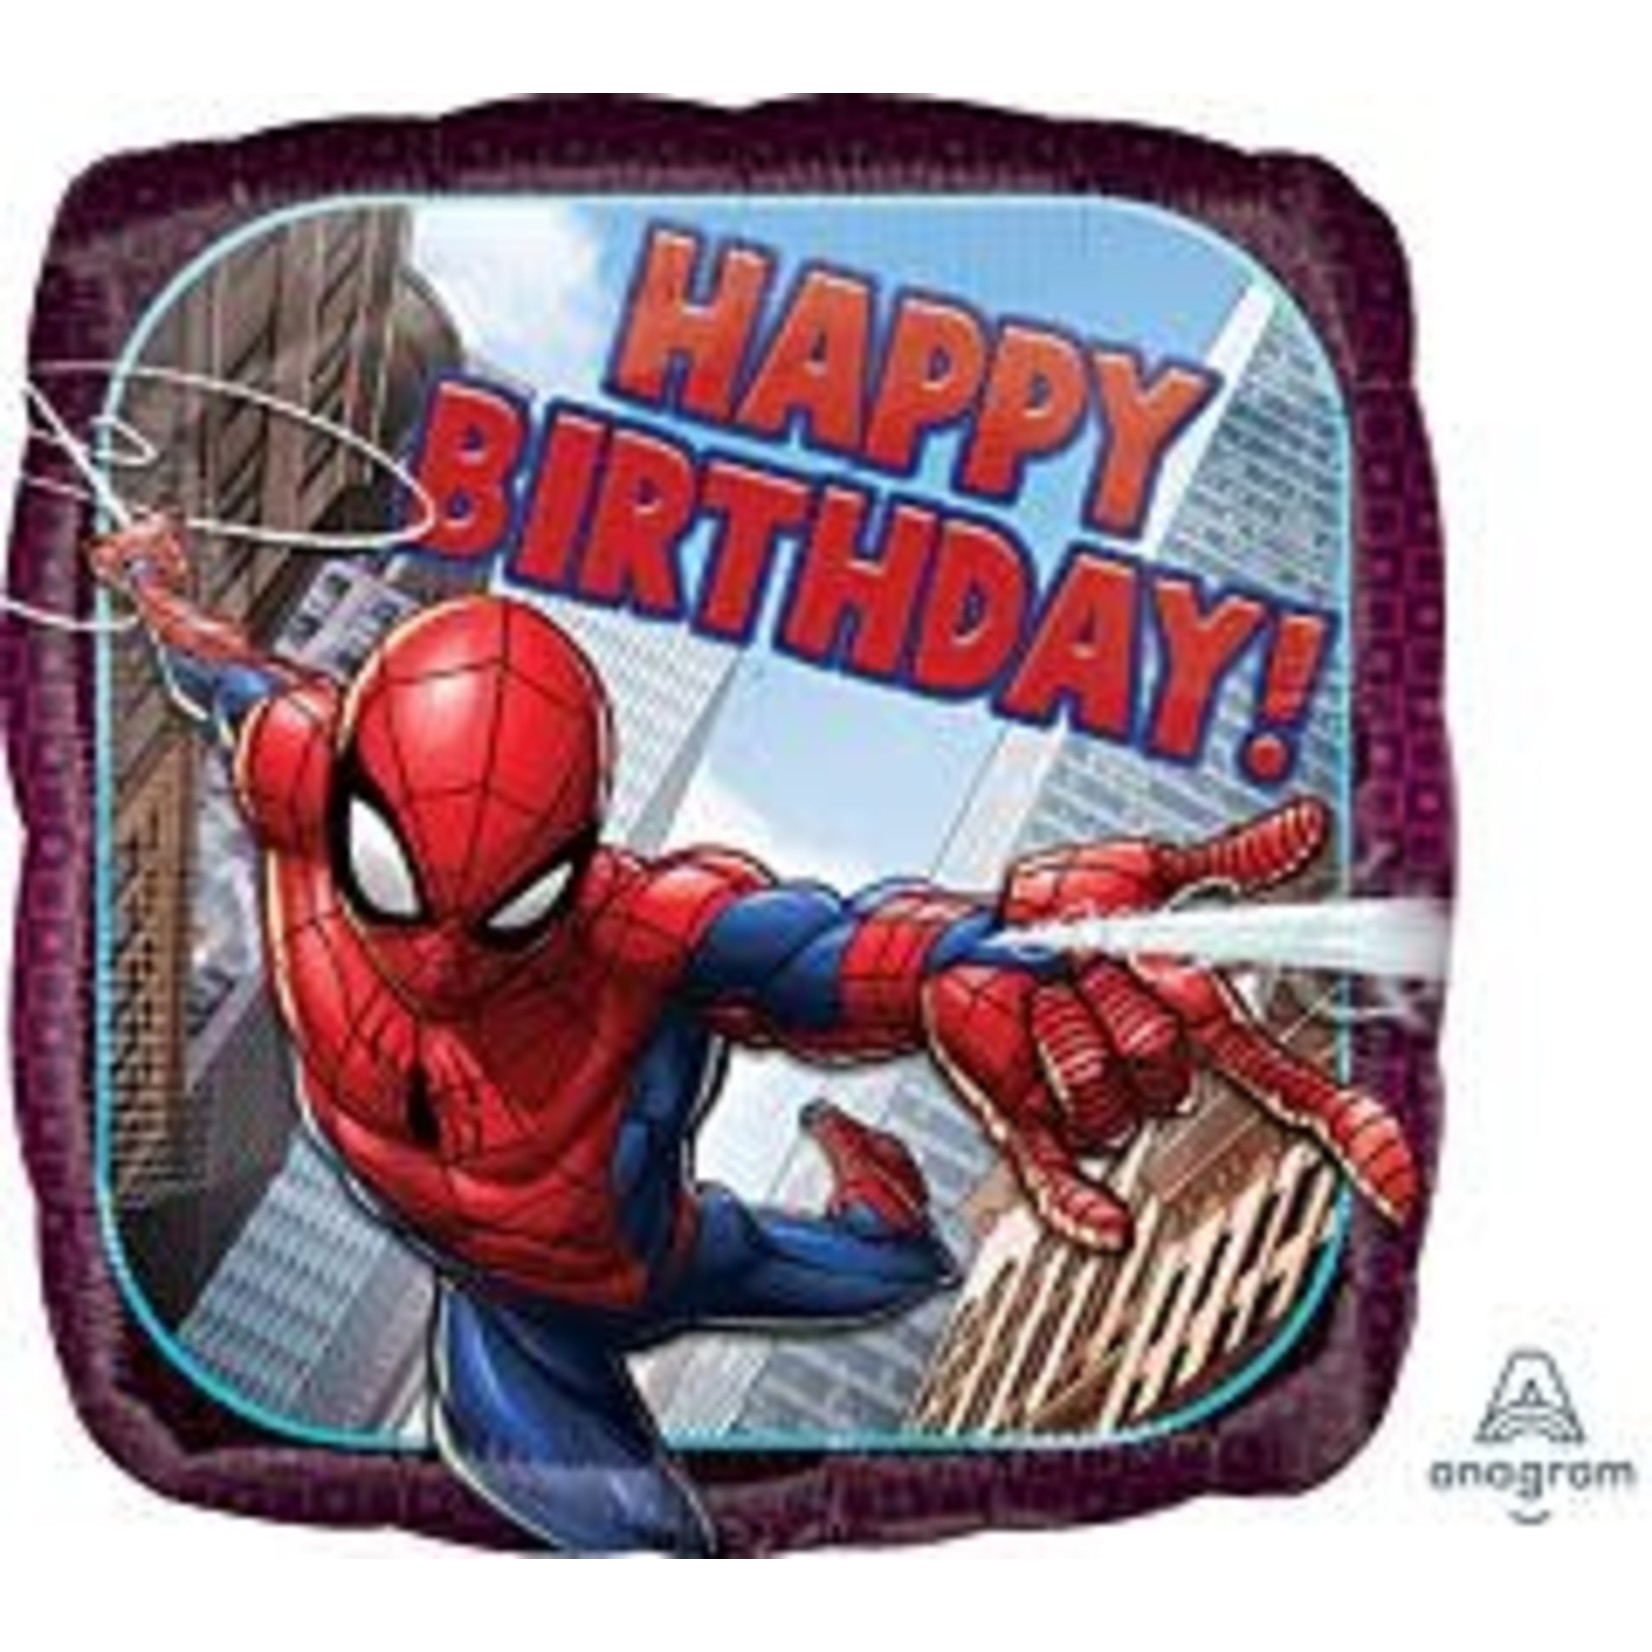 mayflower 18" Marvel Spiderman Birthday Mylar Balloon - 1ct.